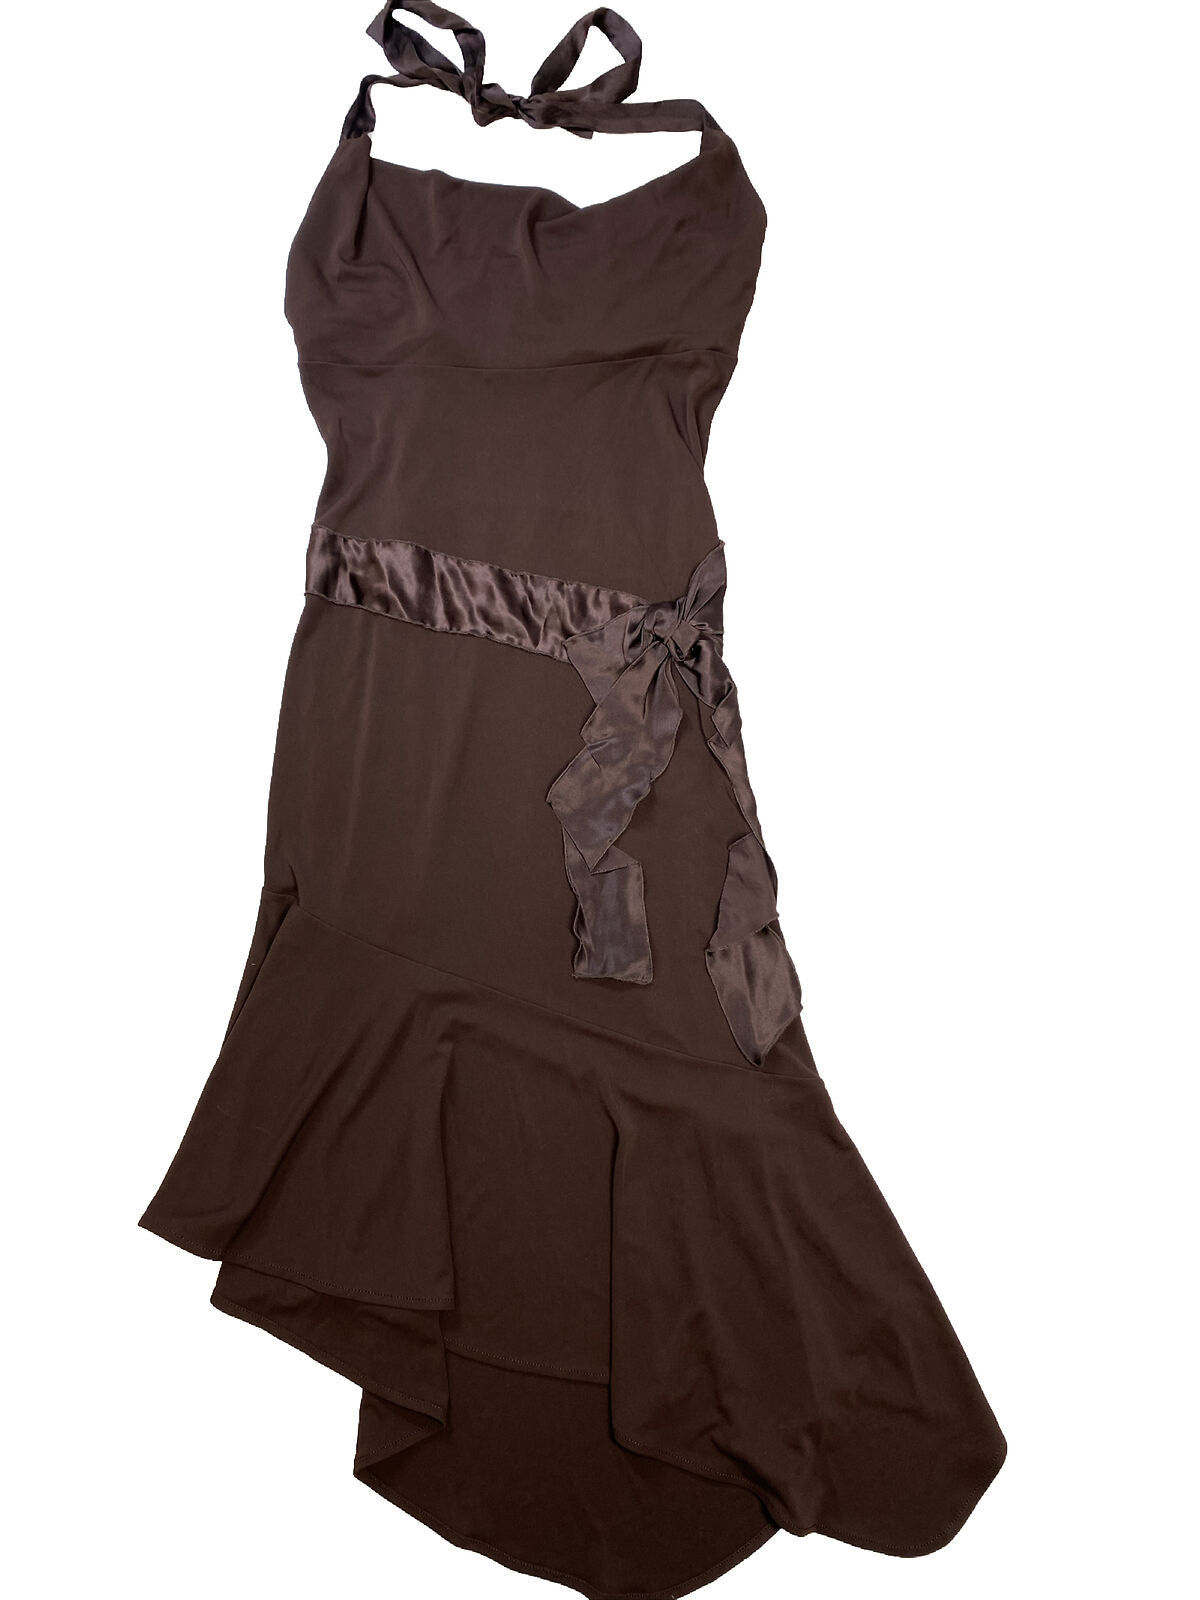 NEW BCBGMaxazria Women's Brown Halter Neck Asymmetrical Dress - S